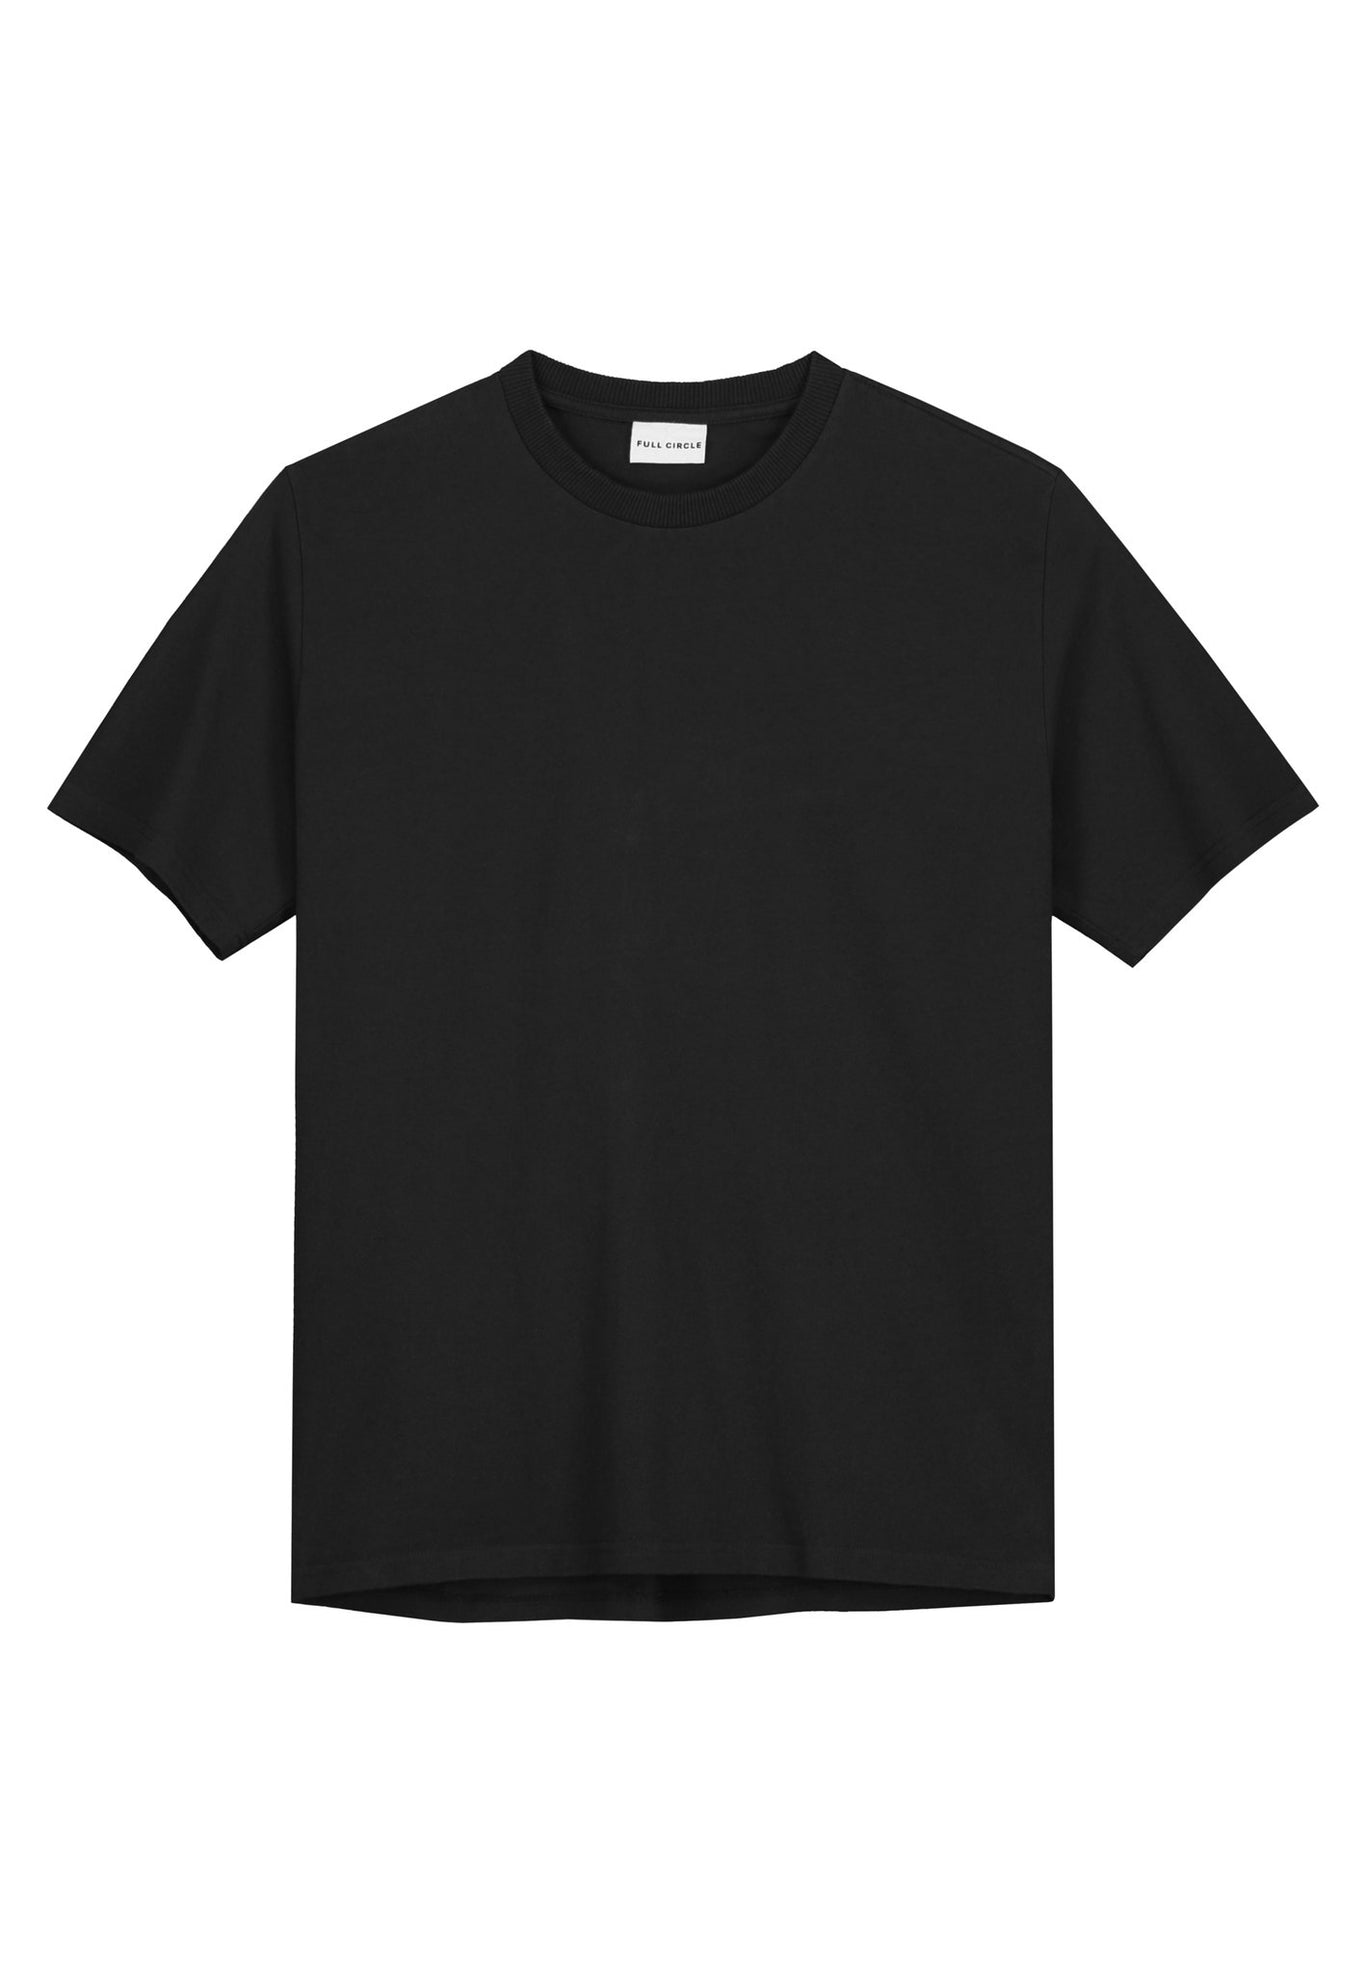 Full Circle Black T-Shirt